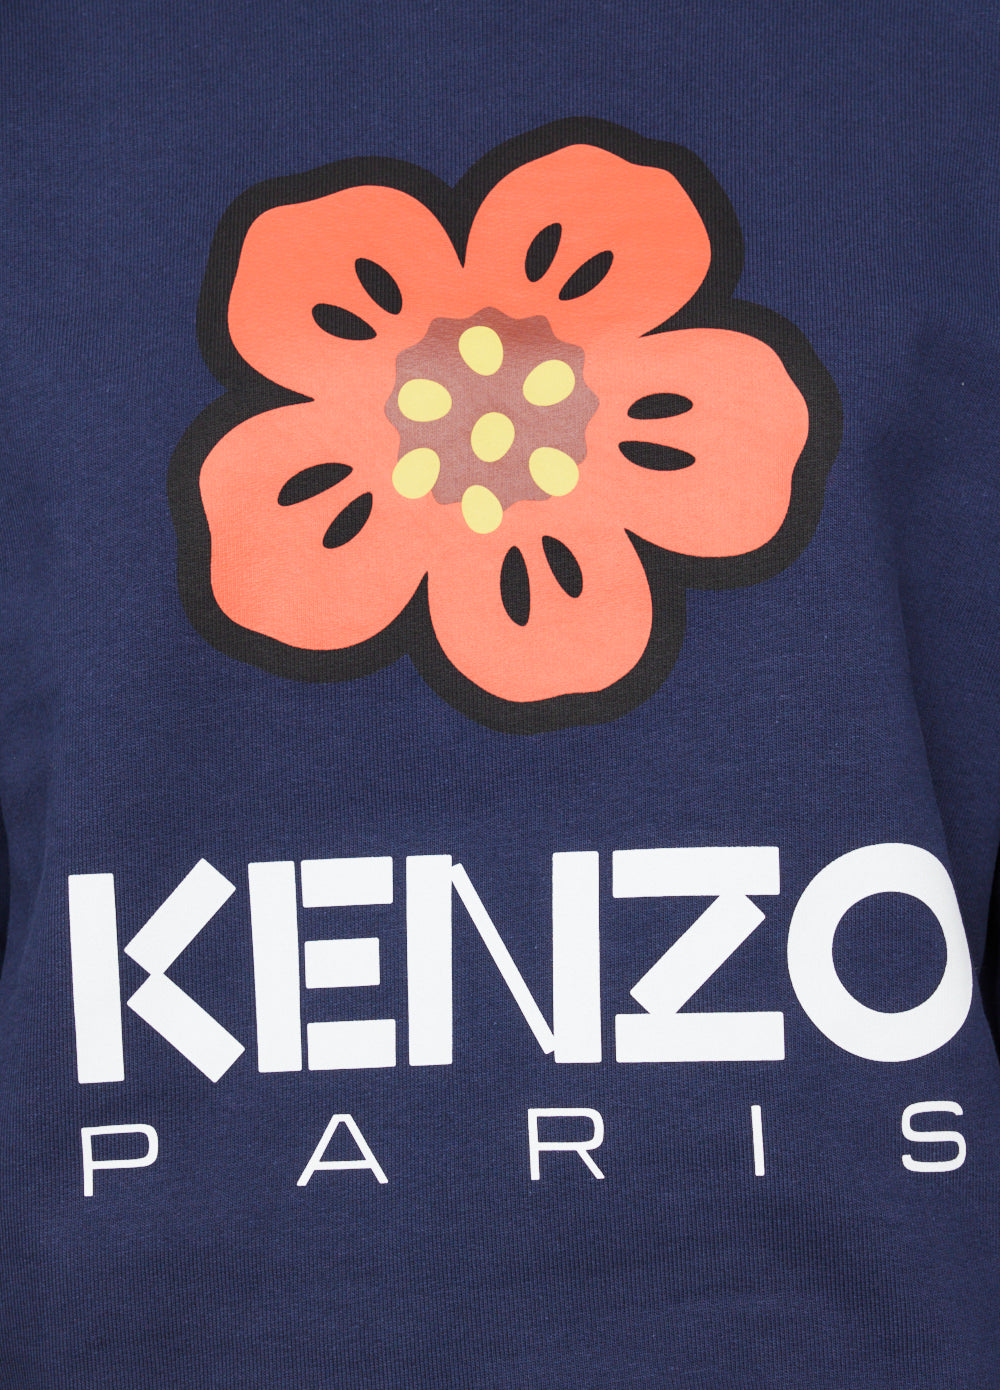 Kenzo Paris Regular Sweatshirt